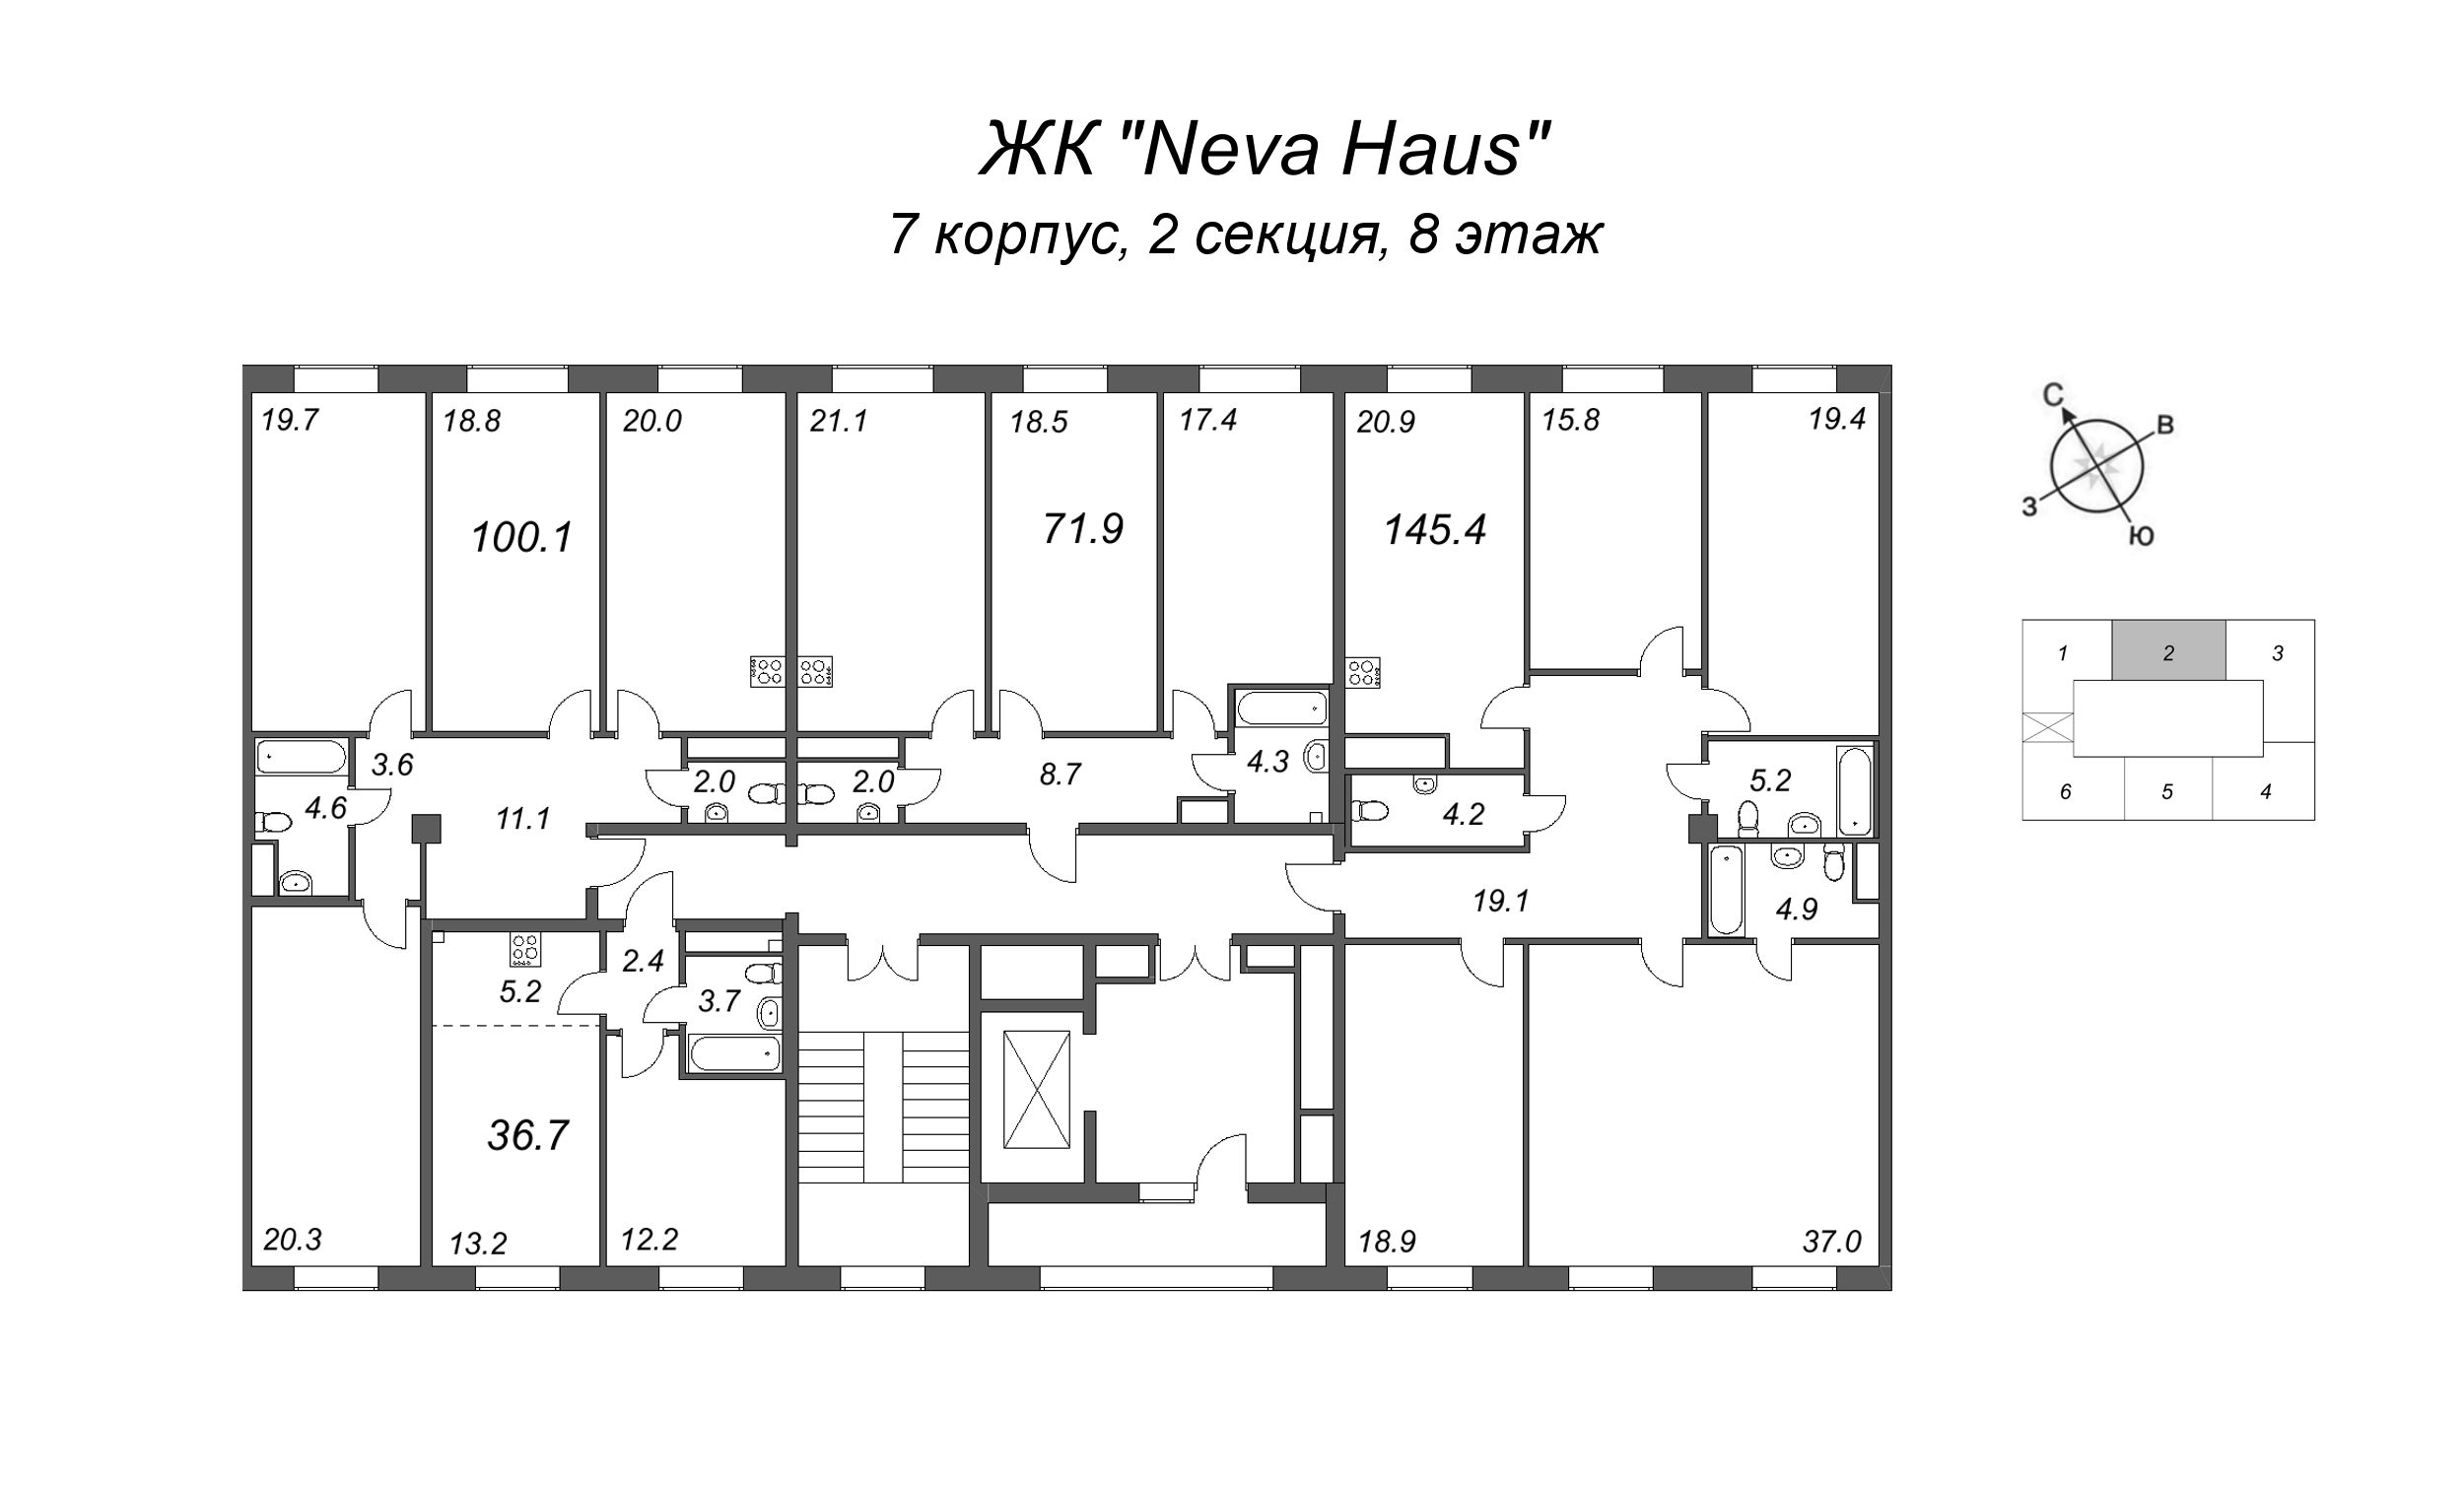 4-комнатная (Евро) квартира, 100.3 м² - планировка этажа